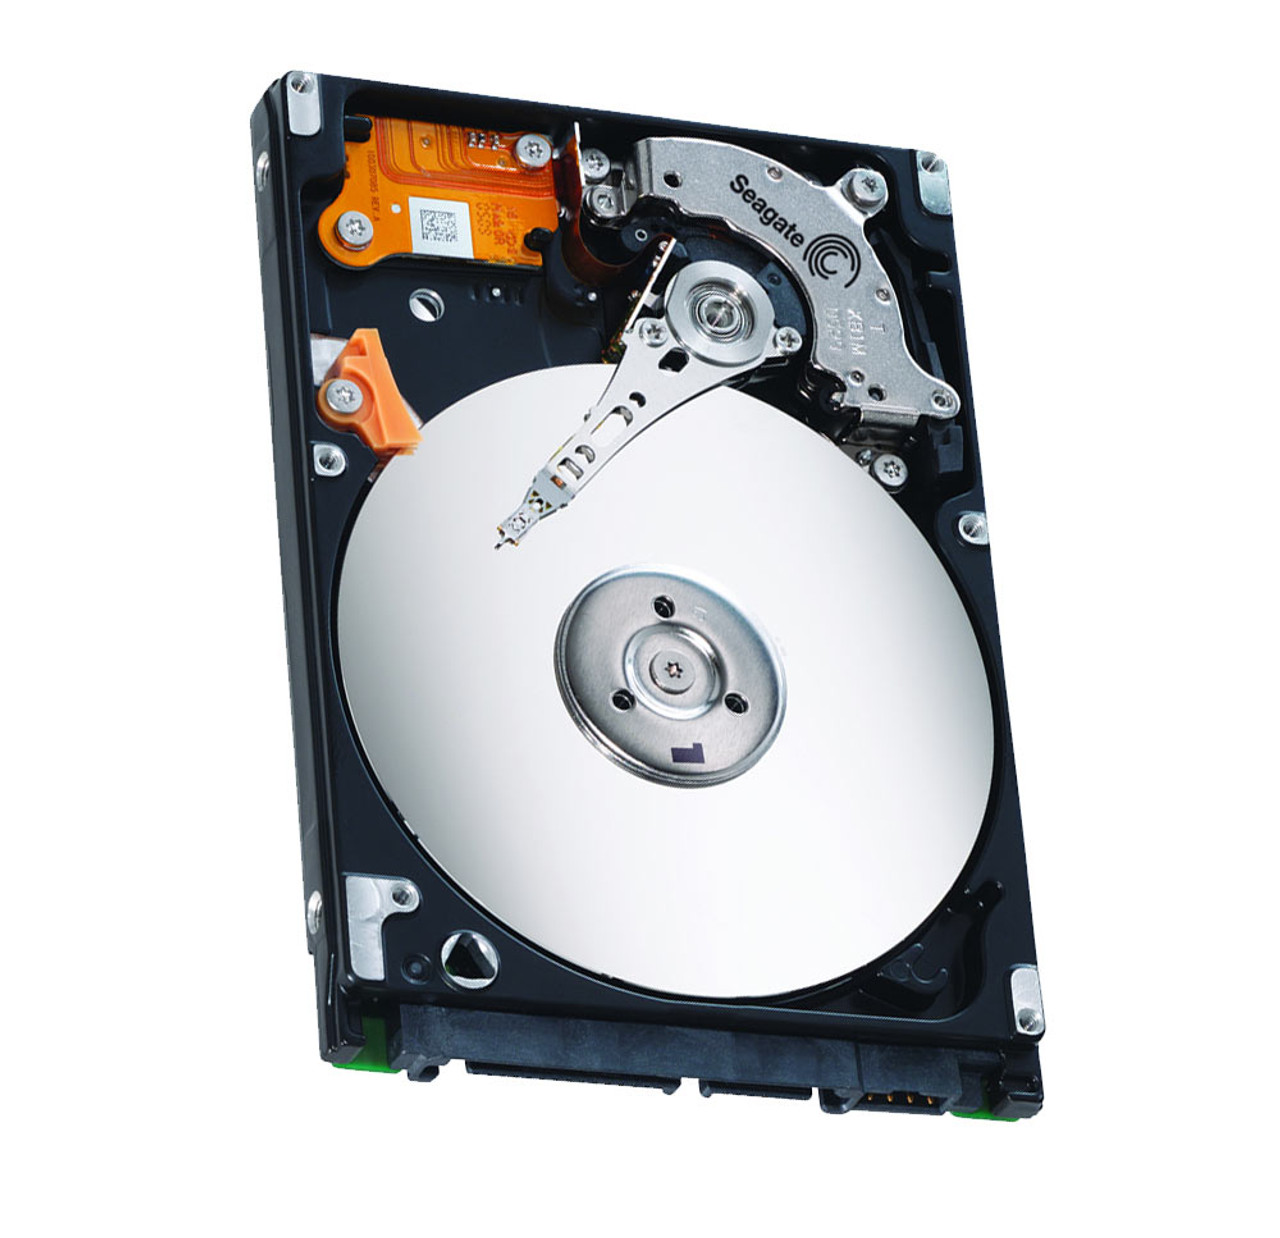 9EV131-500 - Seagate Momentus 5400.5 80GB 5400RPM SATA 3GB/s 8MB Cache 2.5-inch Internal Hard Disk Drive